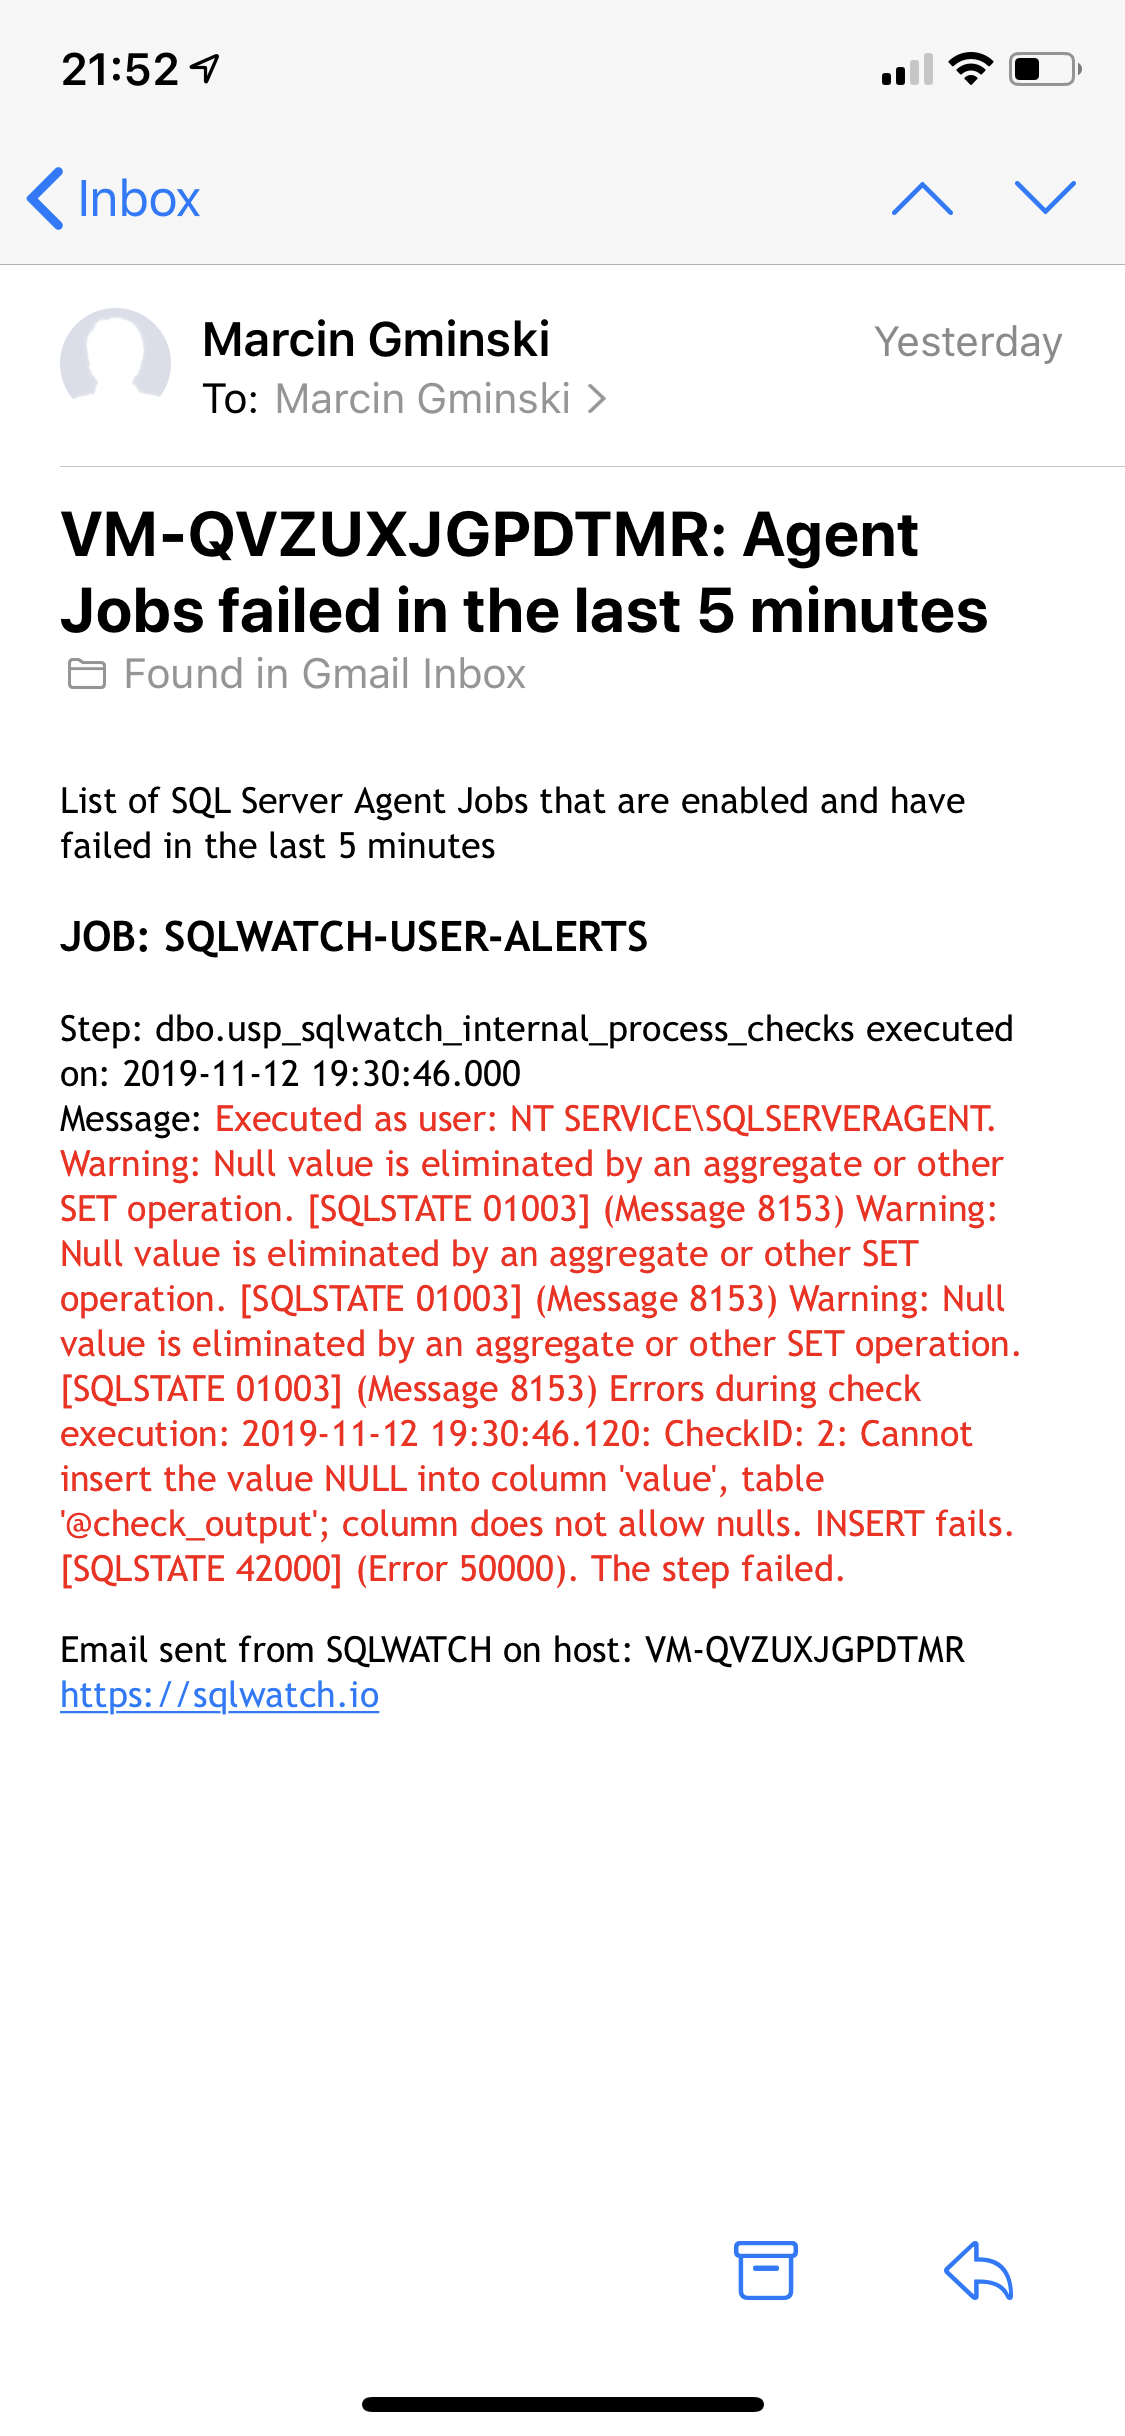 SQLWATCH Agent Job Failure Alert notification